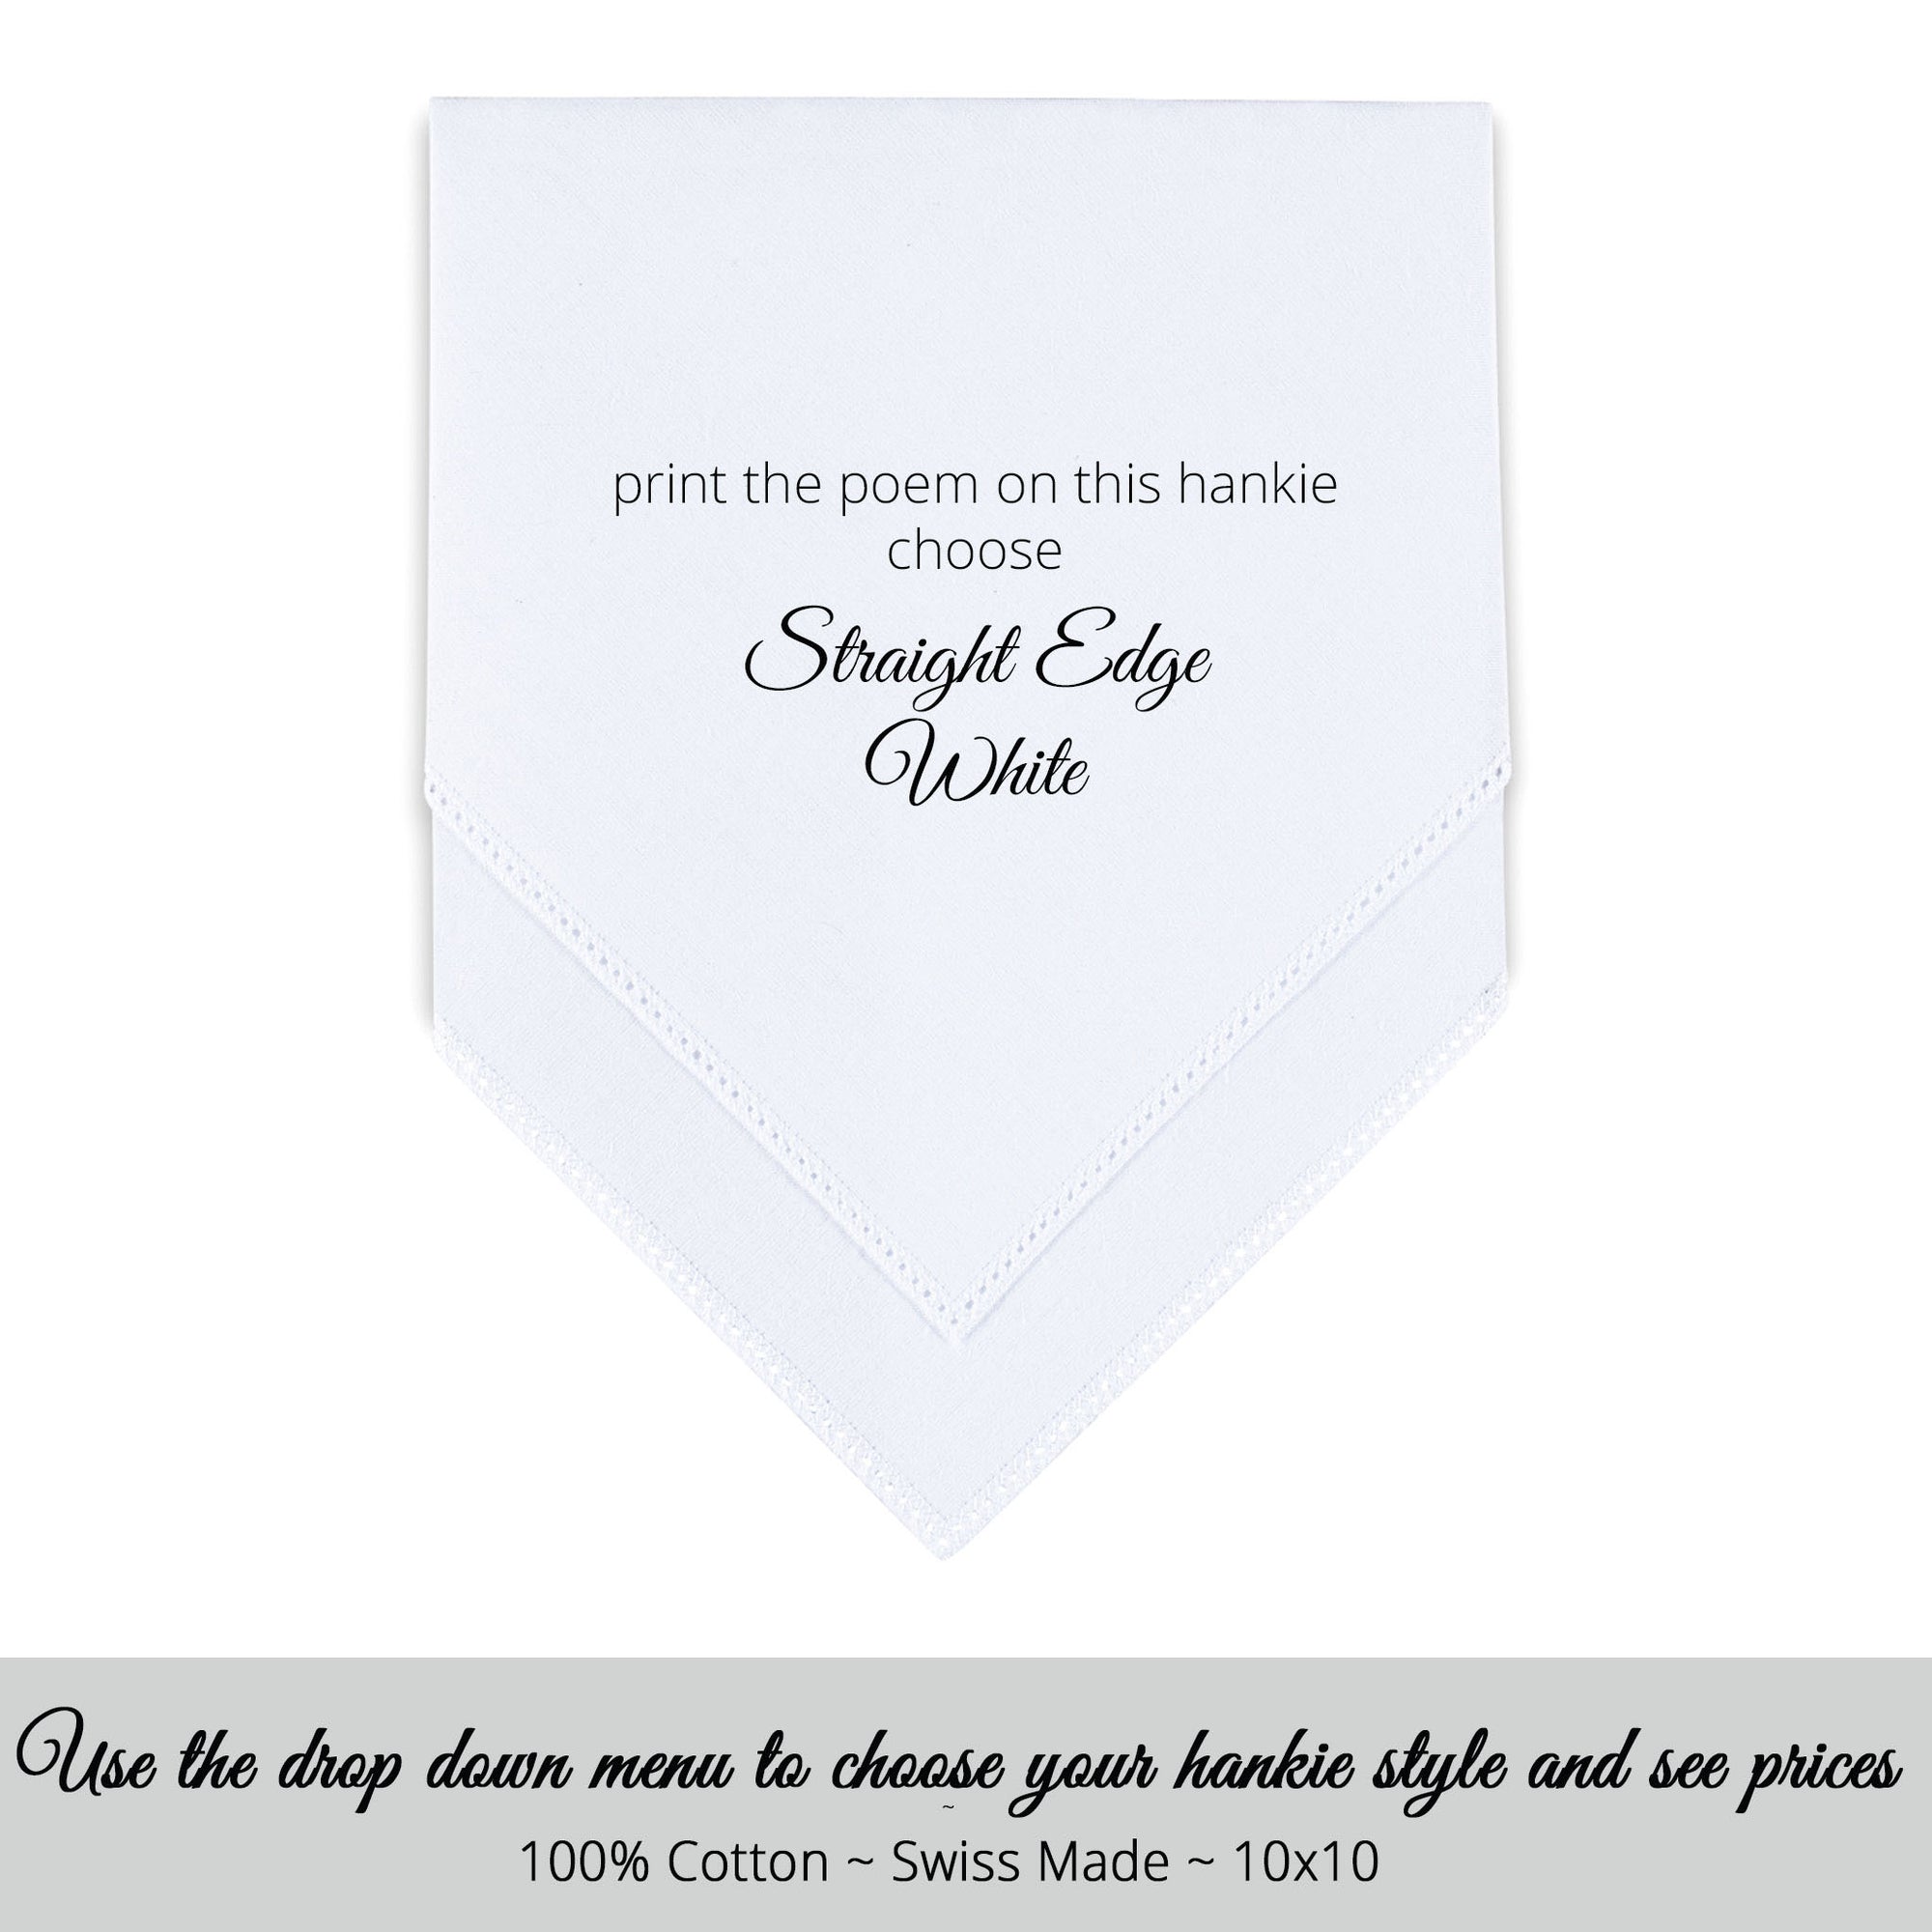 Straight edge white personalized wedding handkerchief for the bride